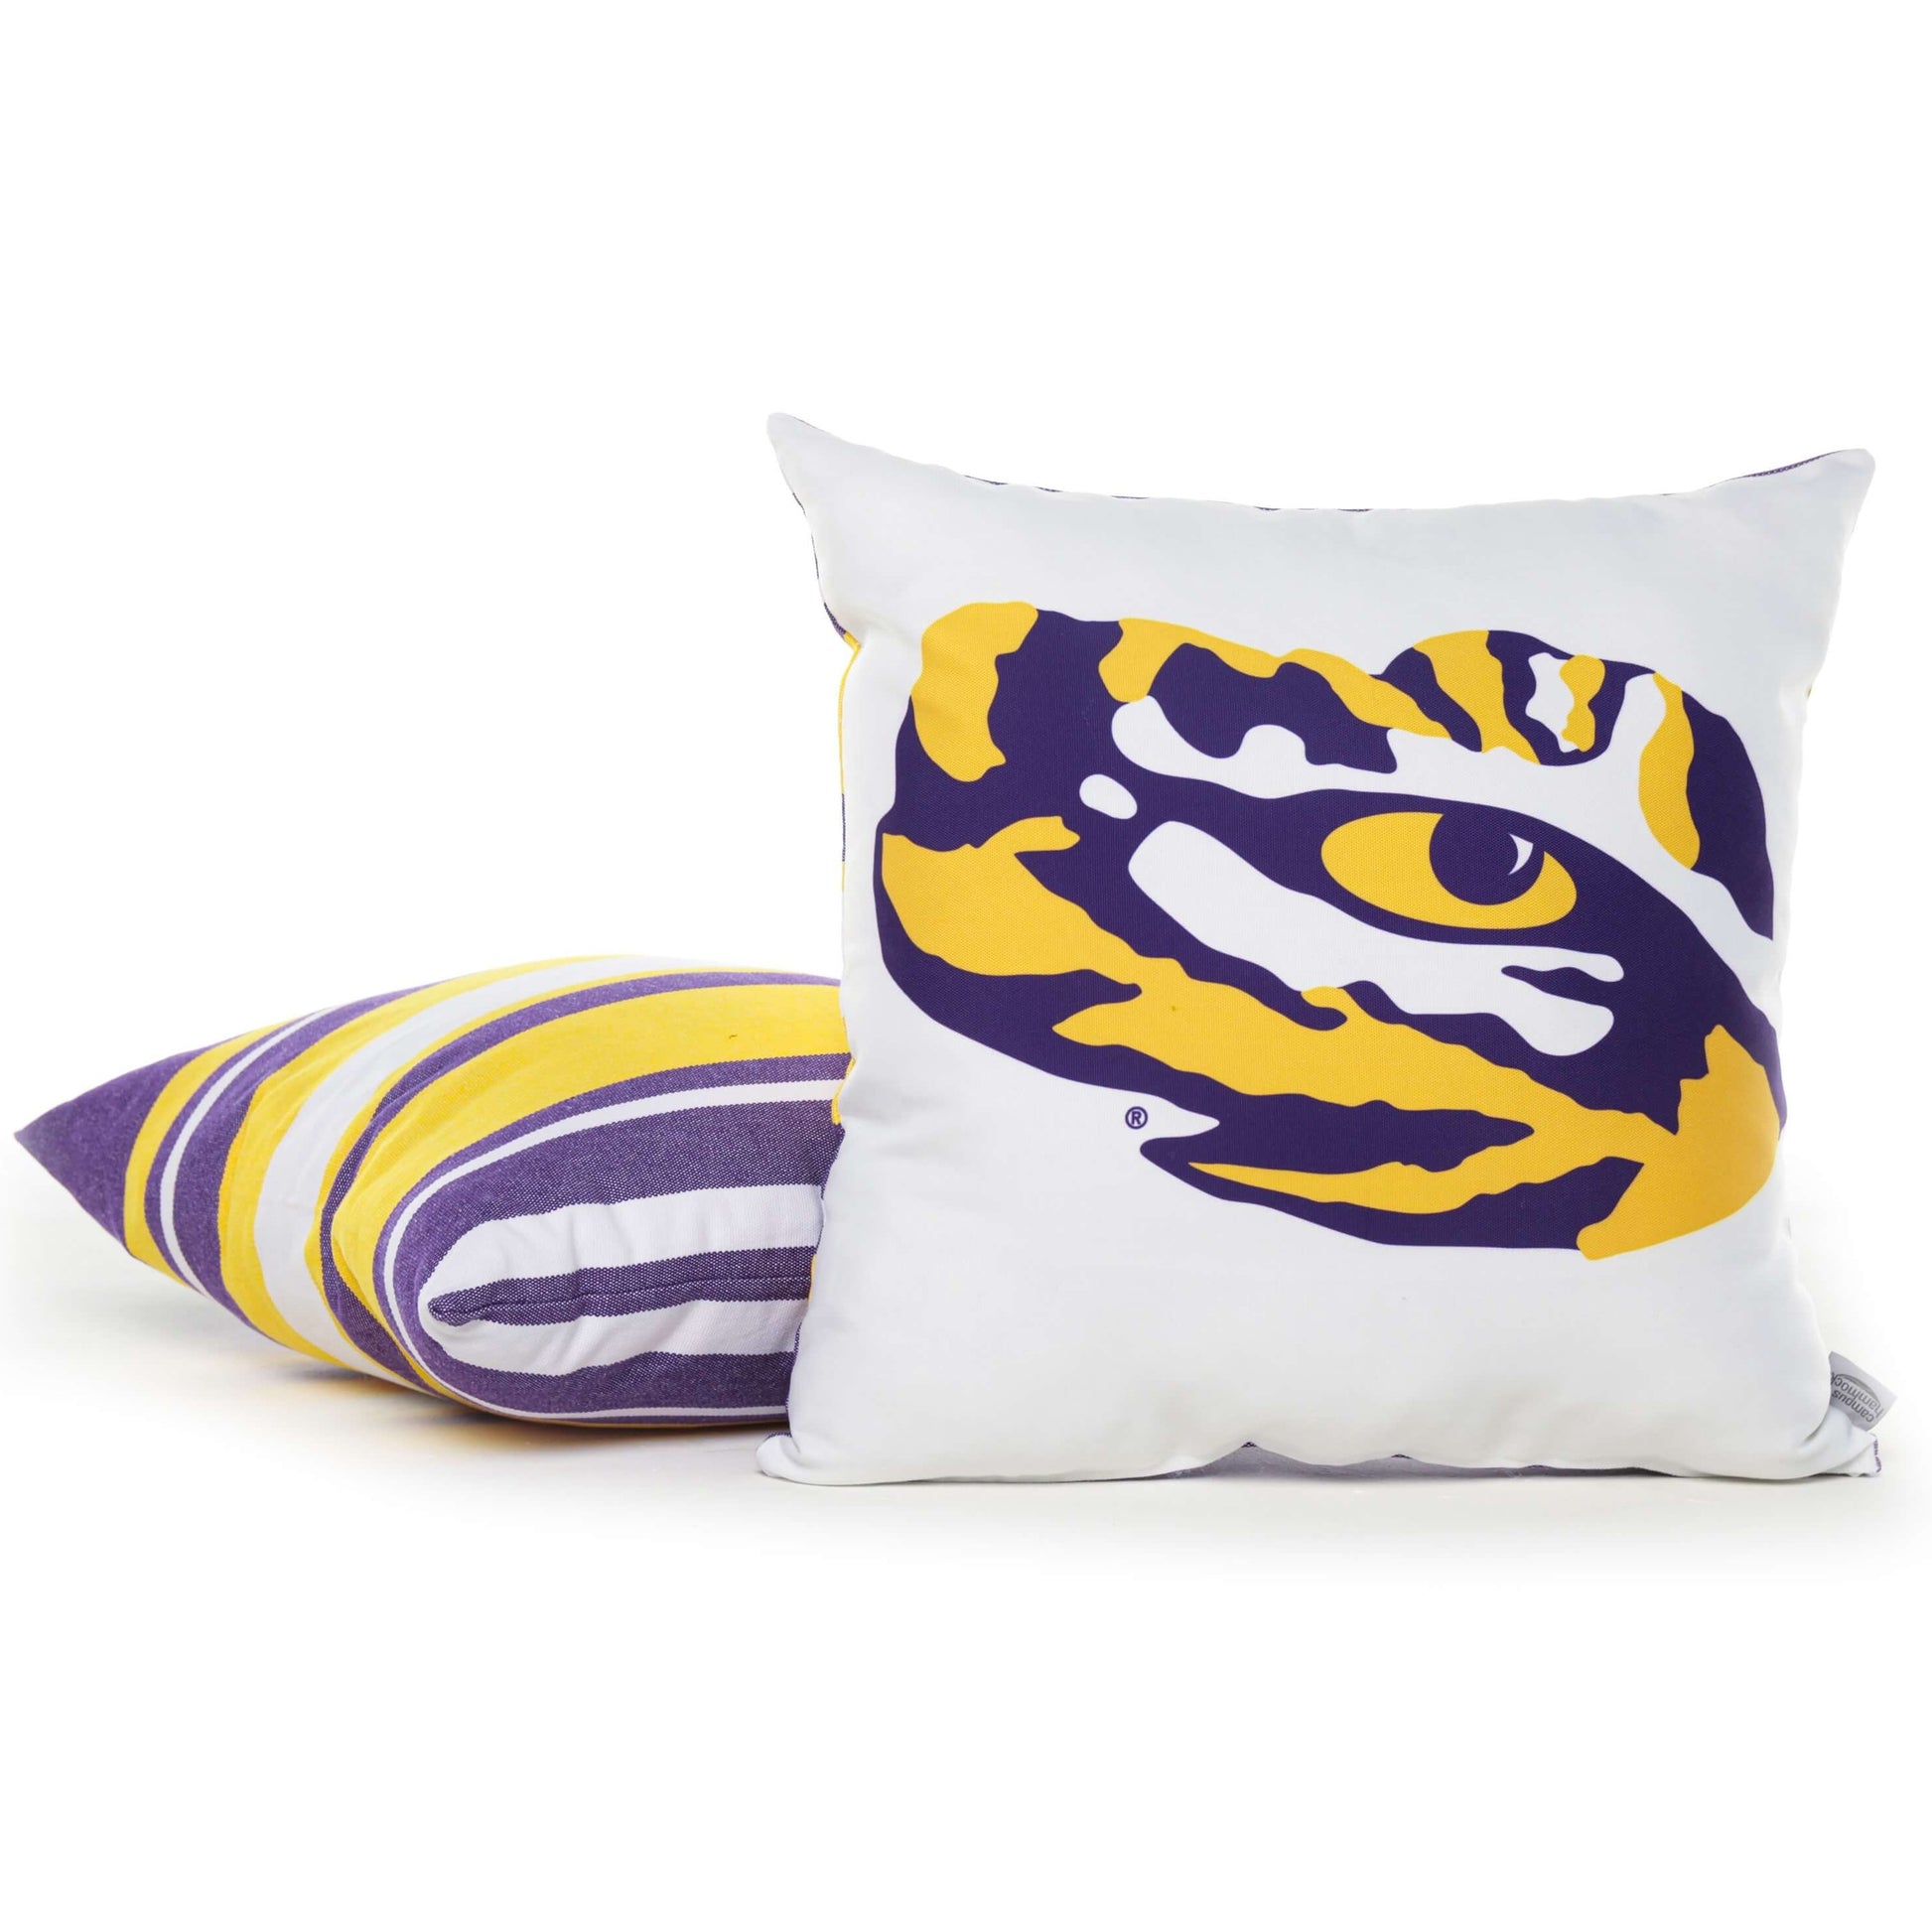 LSU mascot pillow cover